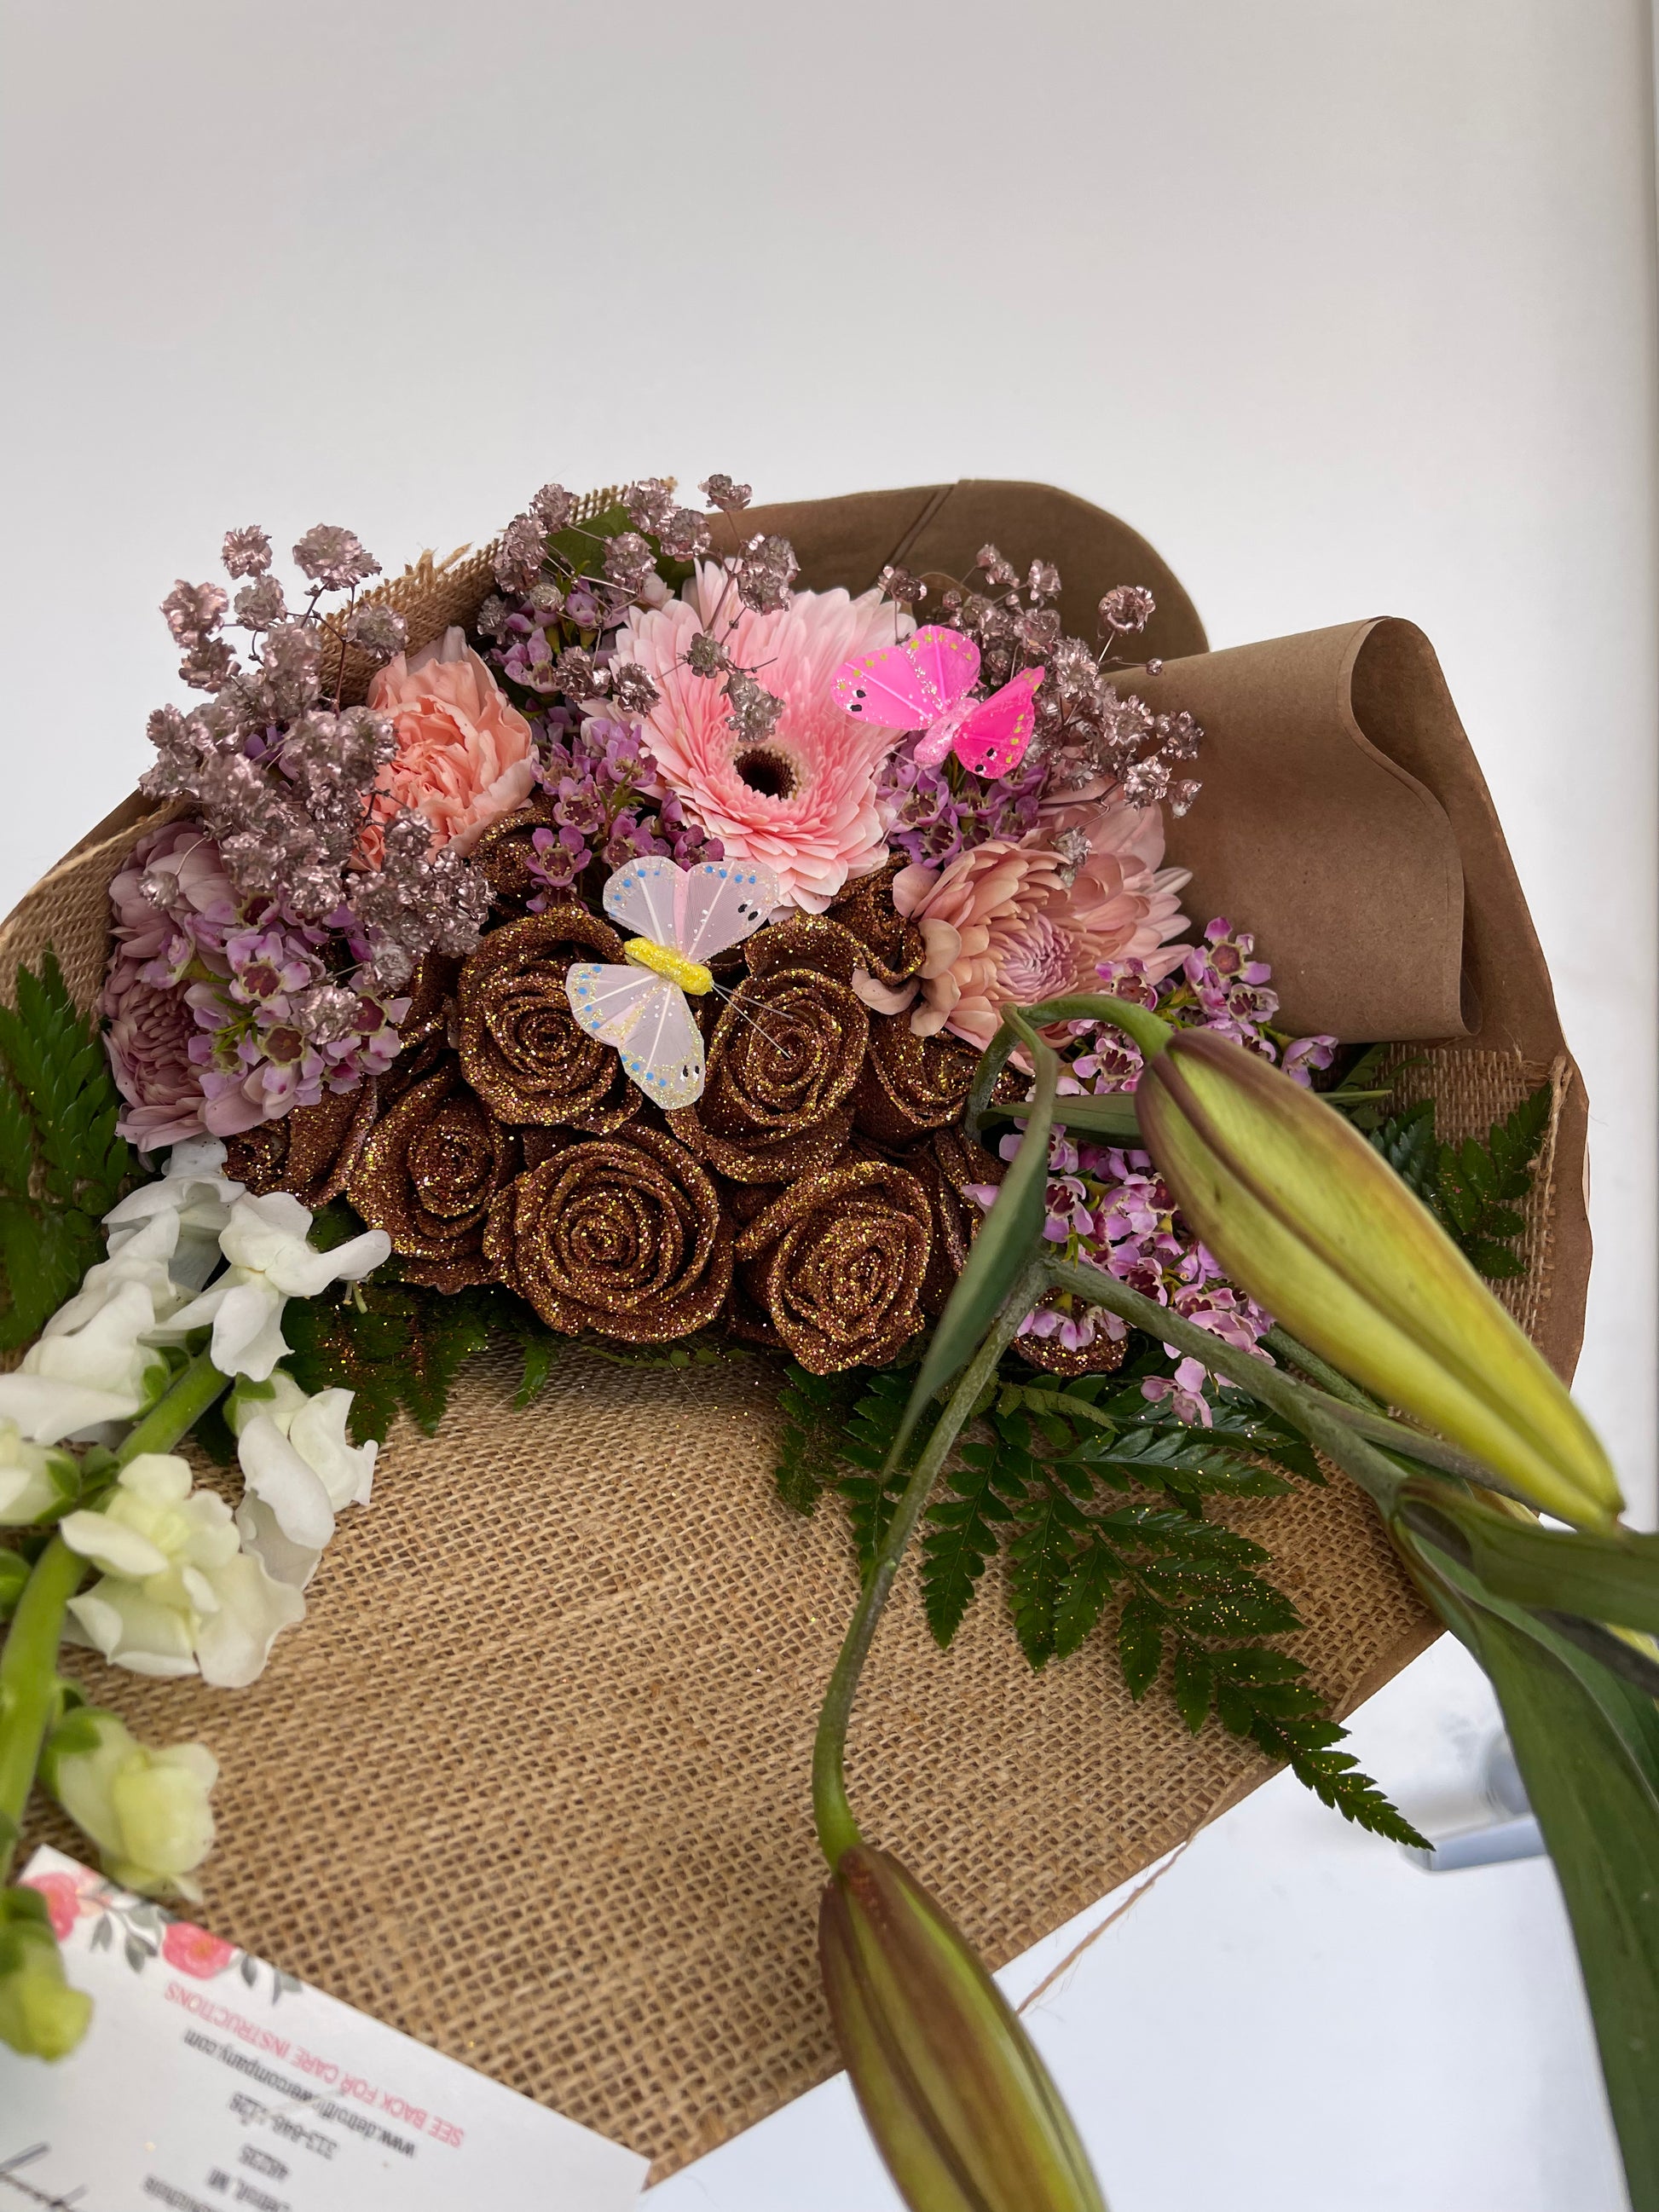 Design Master Rose Scent - Potomac Floral Wholesale